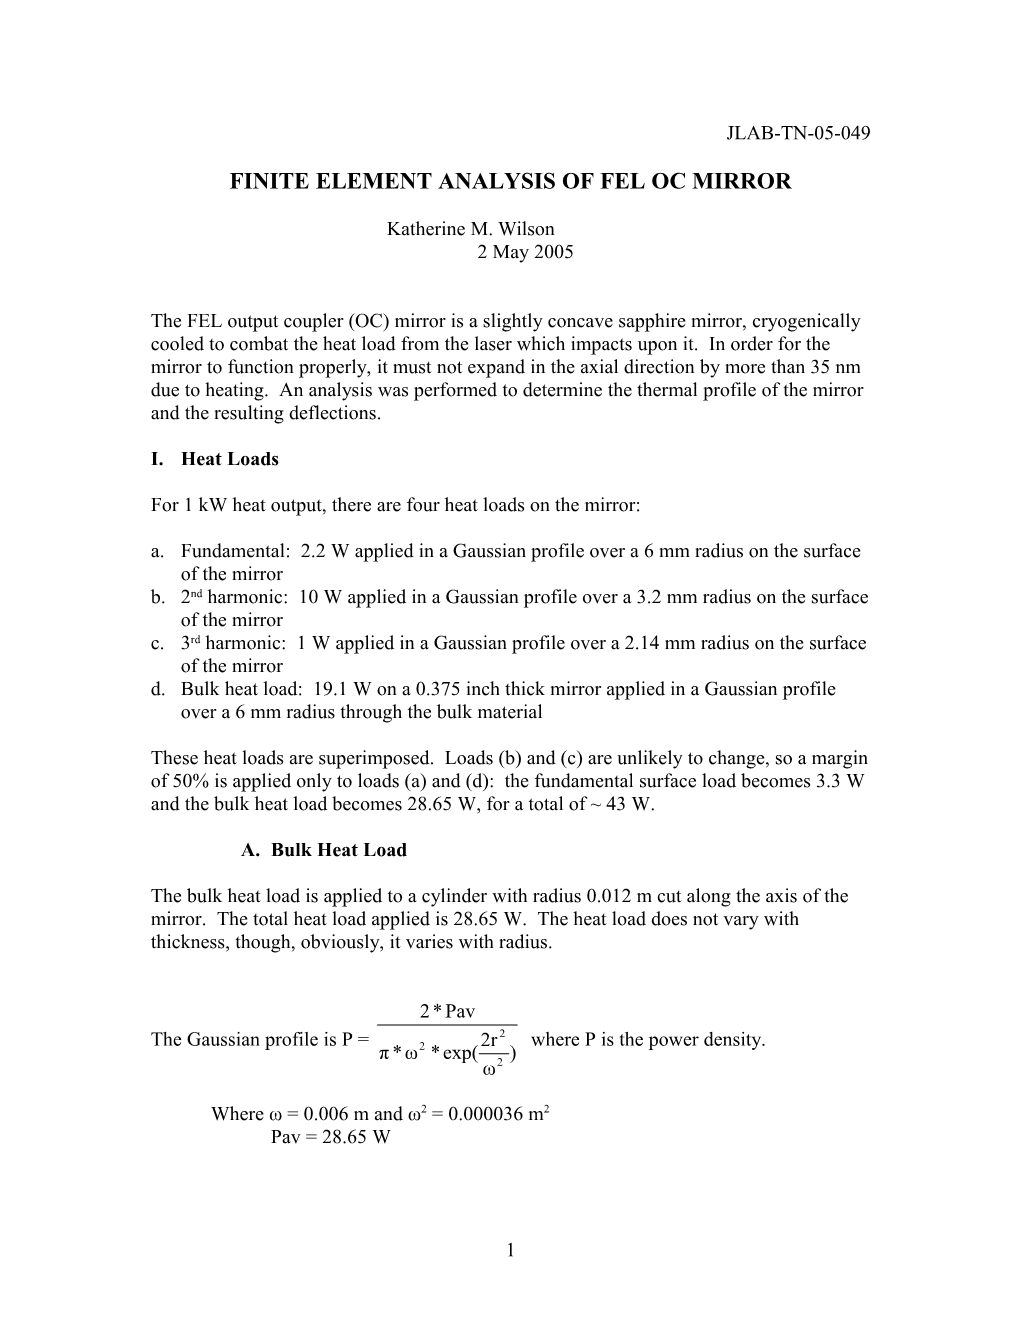 Finite Element Analysis of FEL OC Mirror